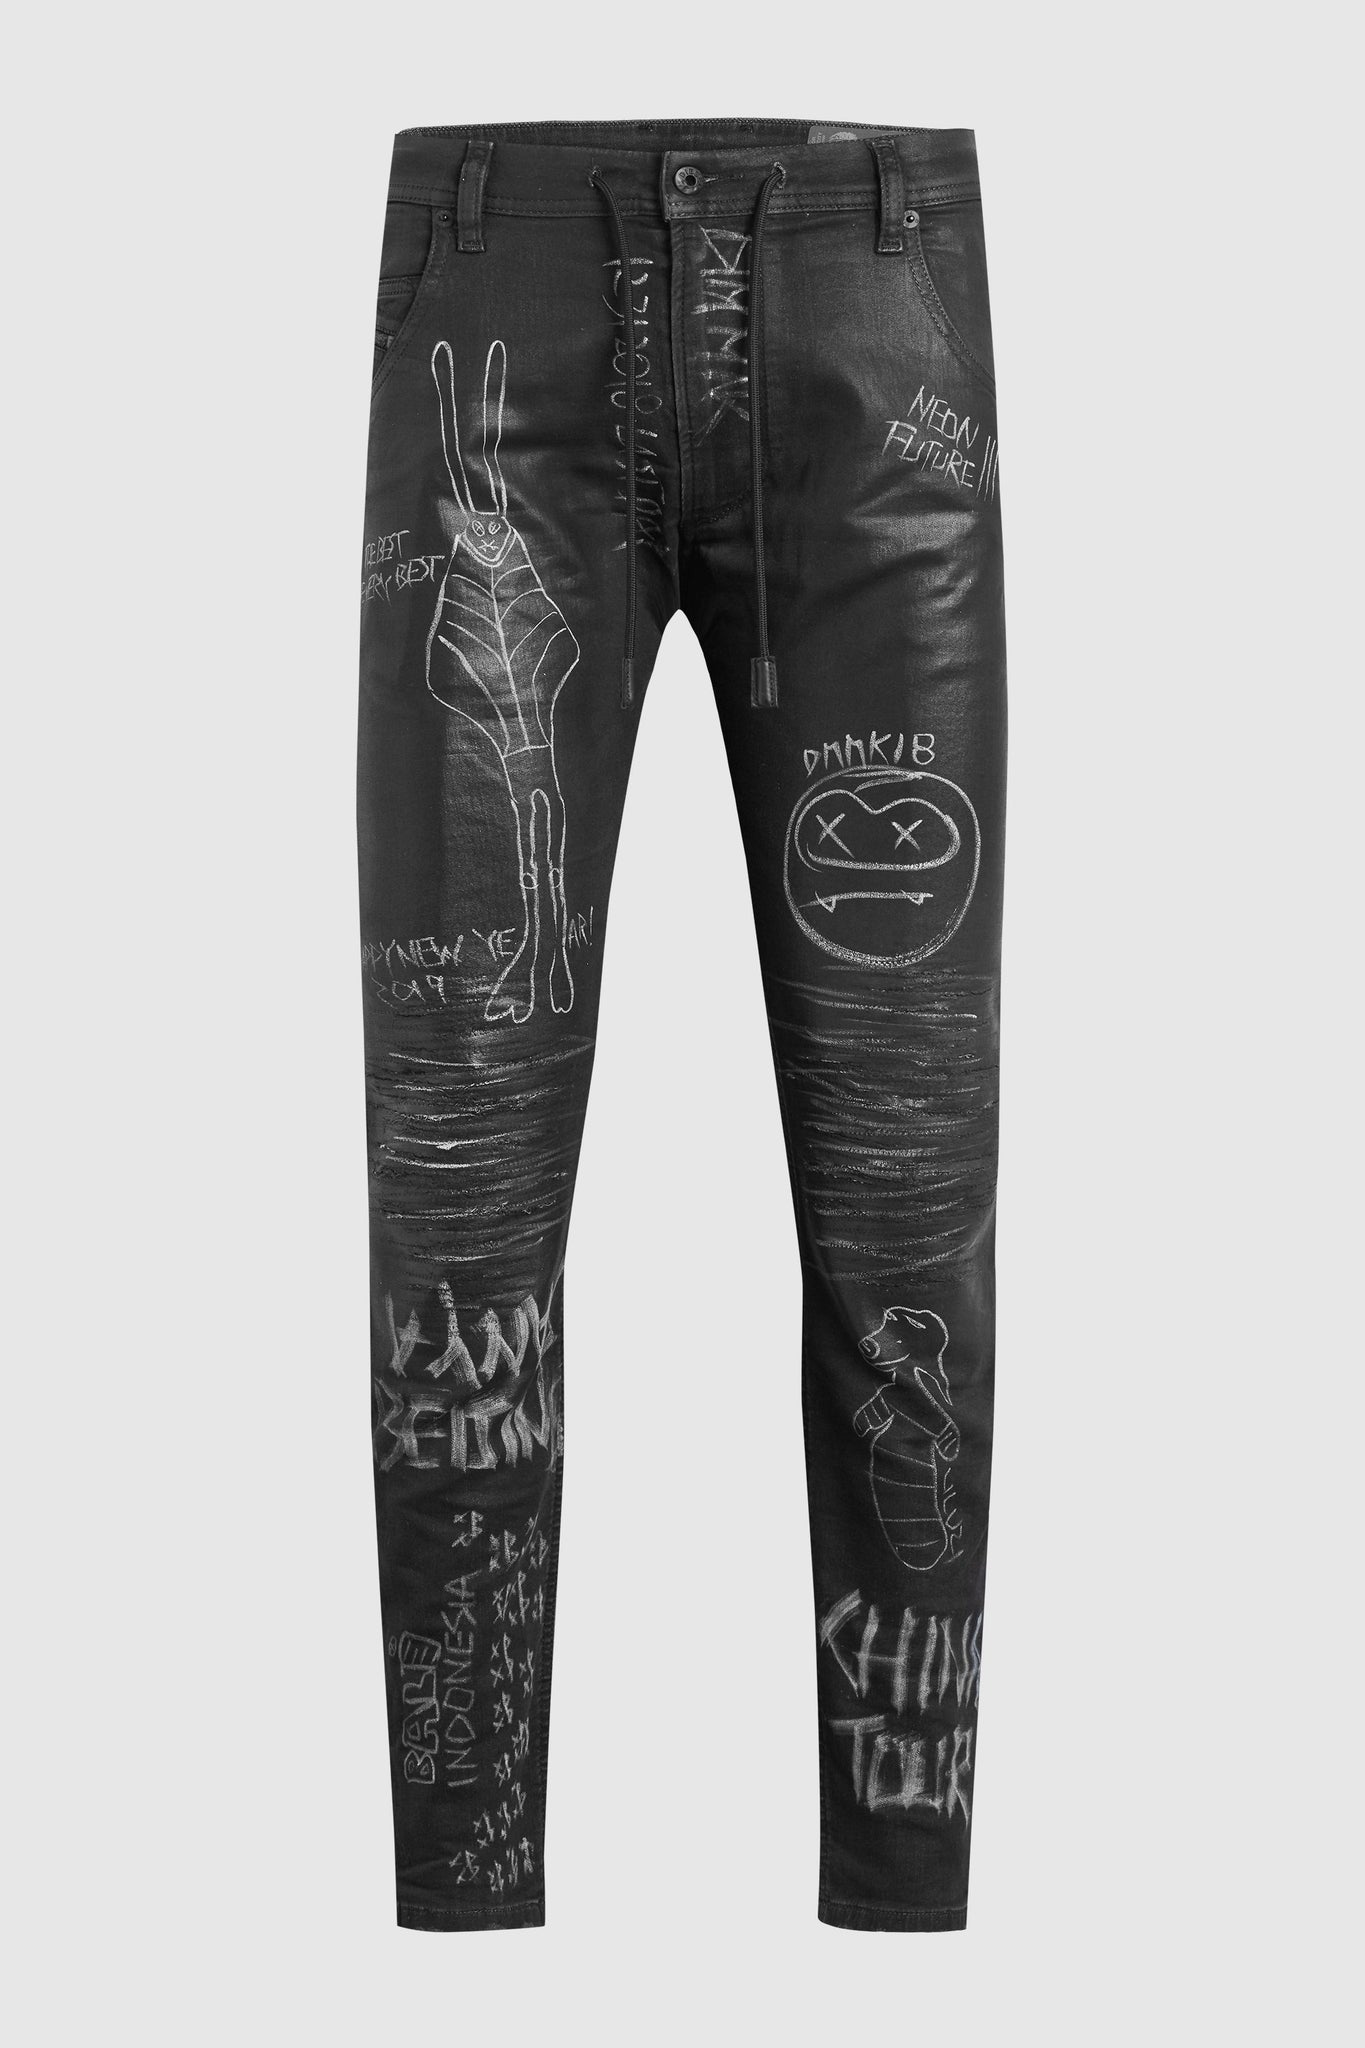 Aoki China/Bali Tour Black Jeans #16